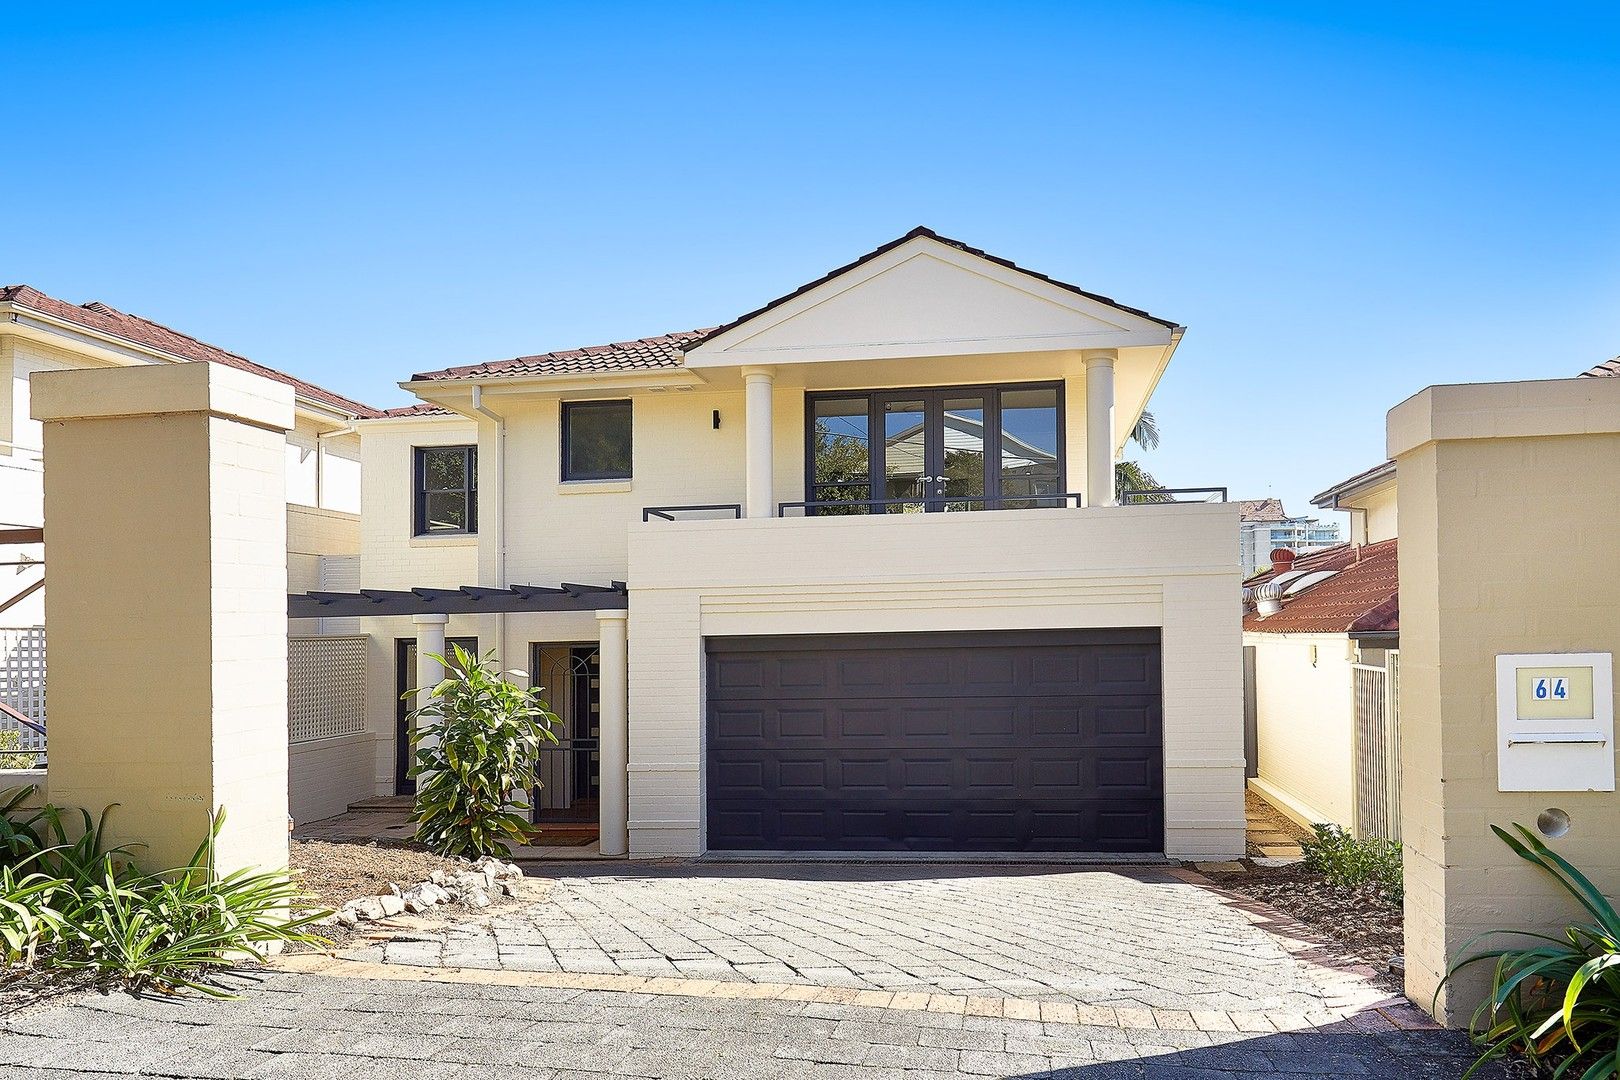 5 bedrooms House in 64 Balfour Road KENSINGTON NSW, 2033